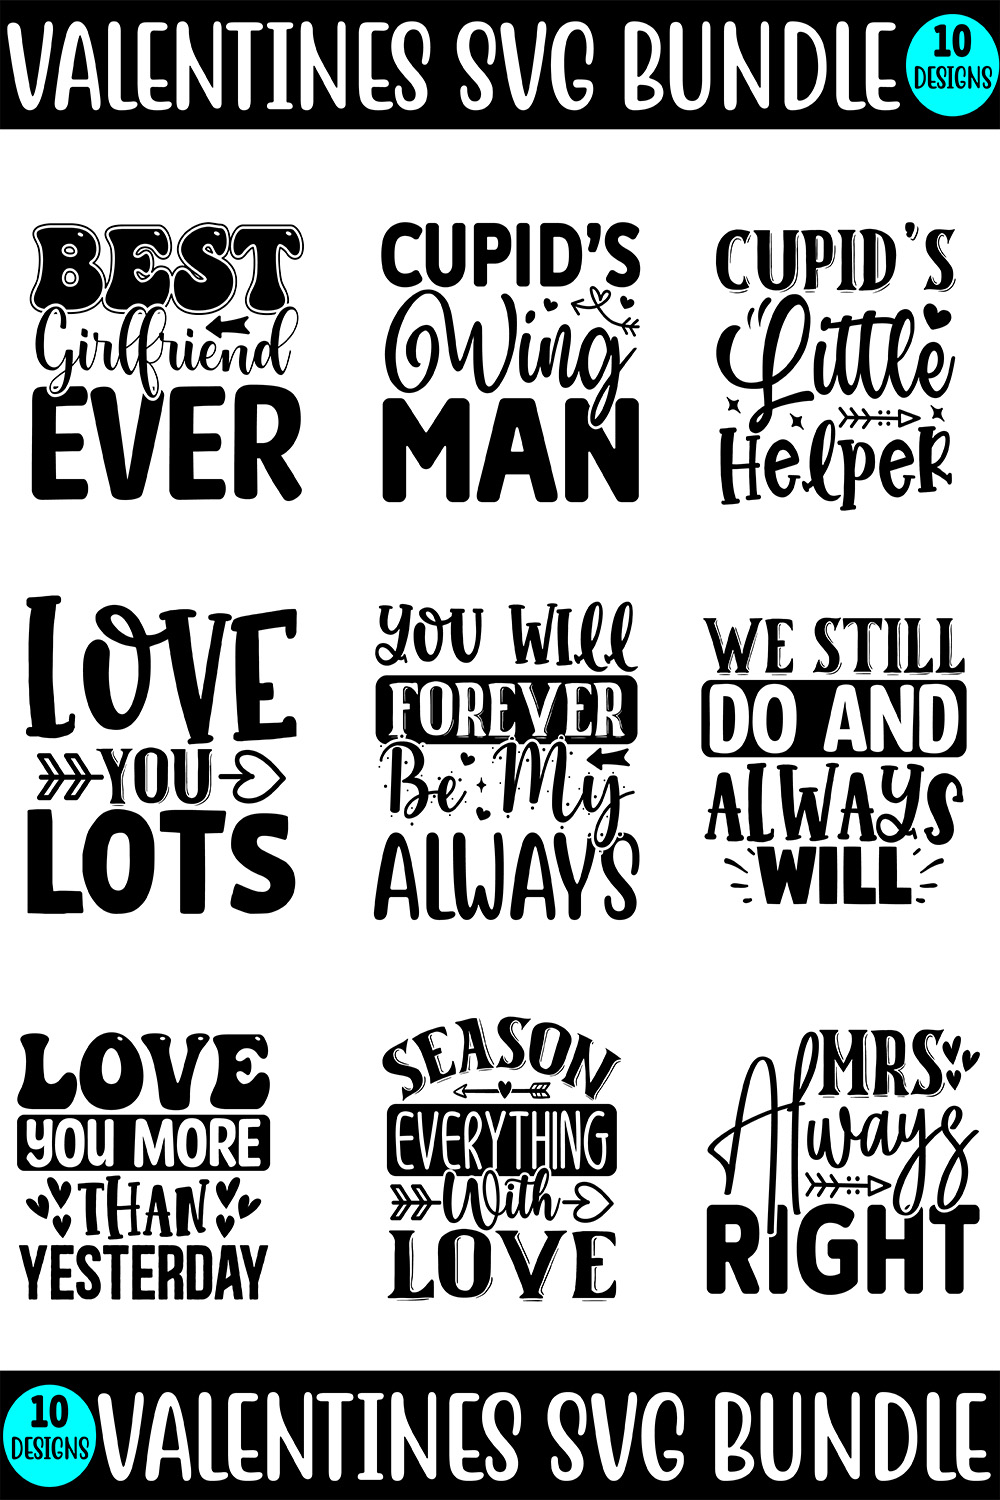 Quotes Valentines SVG Bundle Design pinterest image.